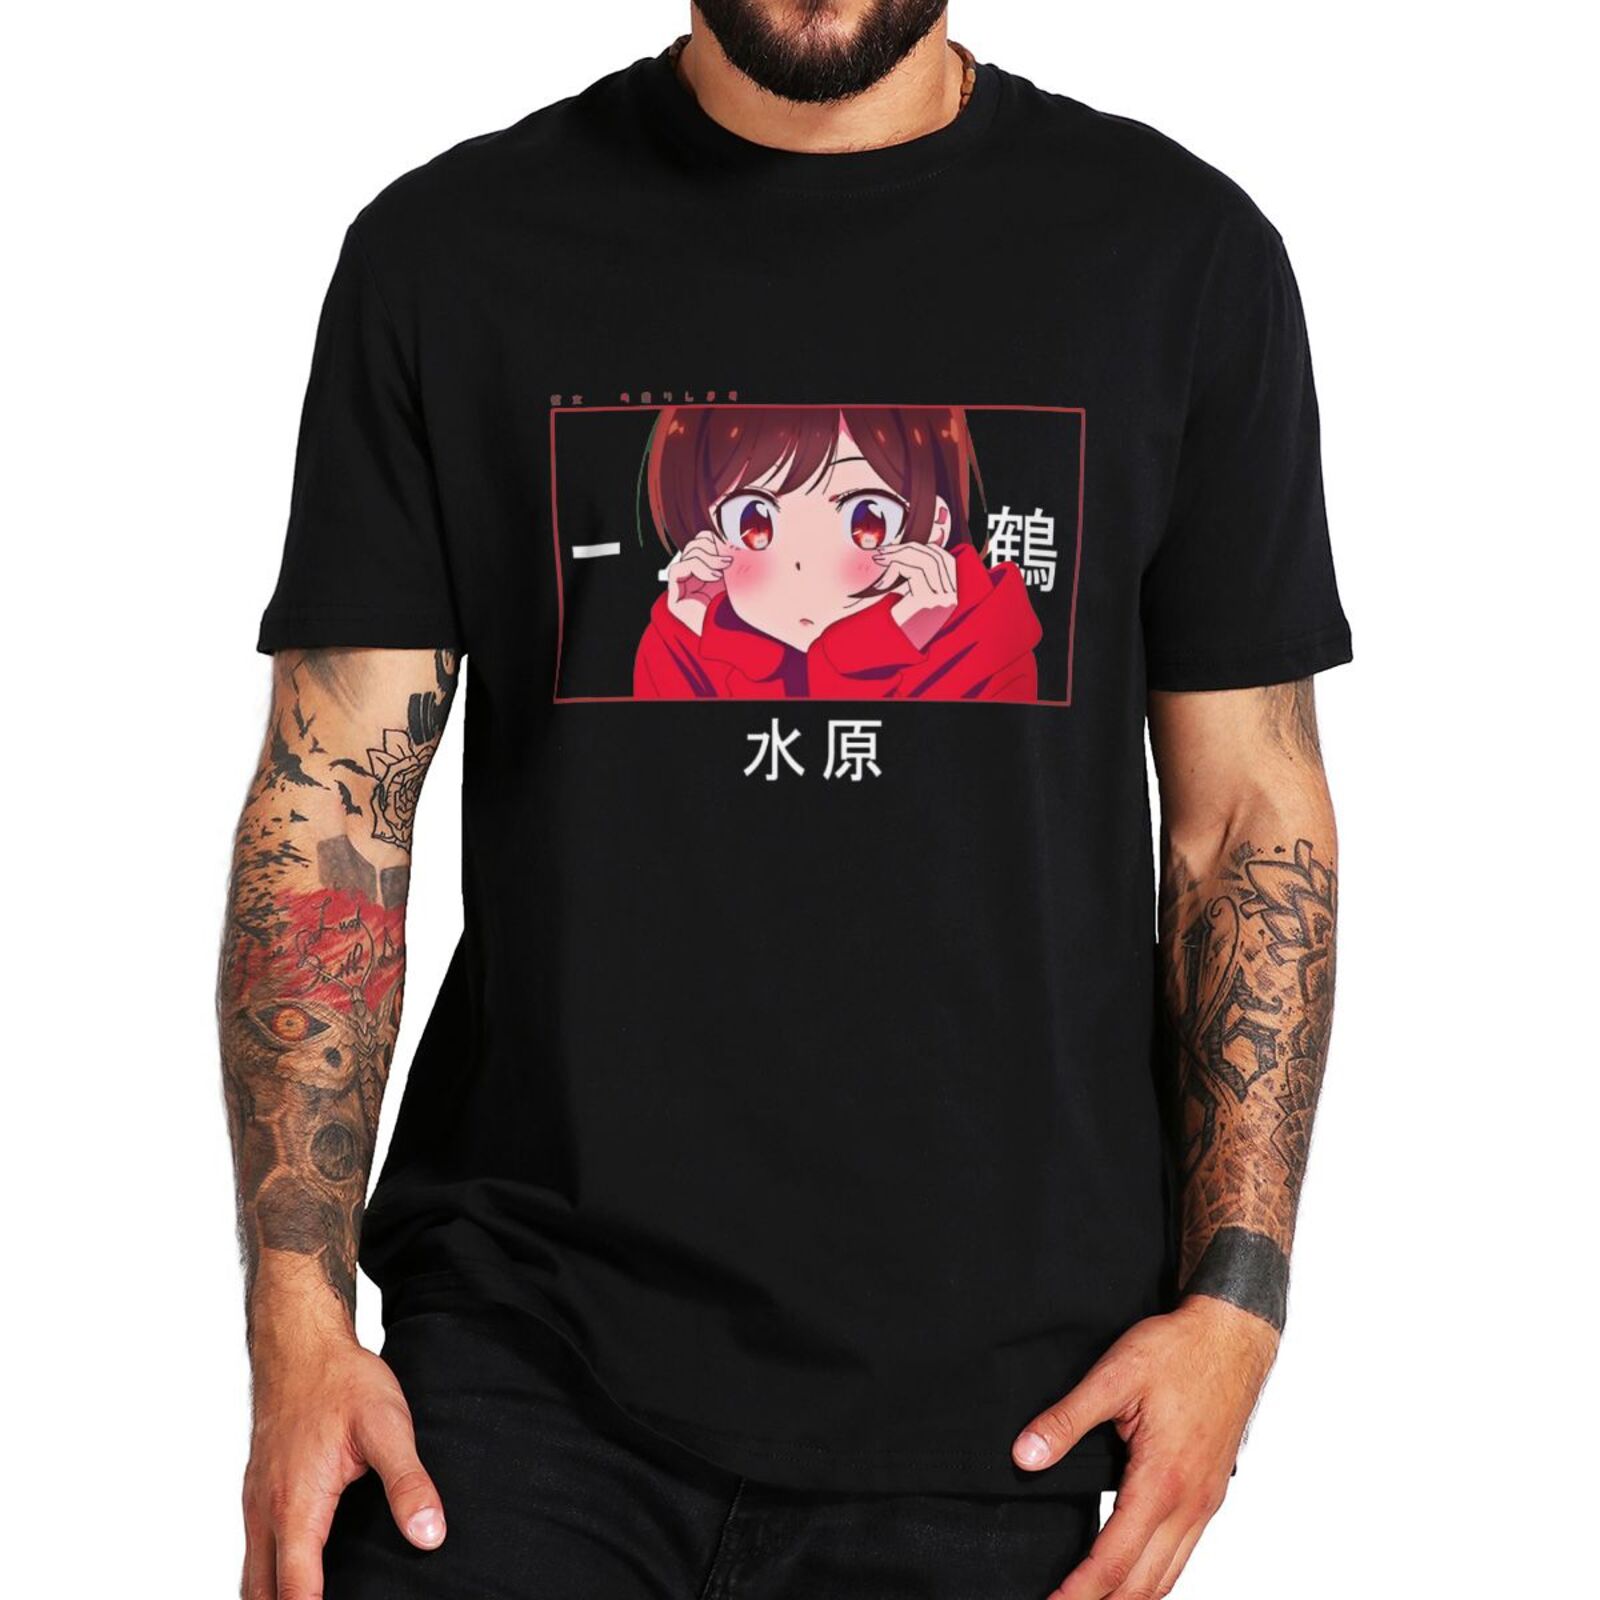 Rent a Girlfriend – Chizuru Ichinose Themed Cute T-Shirts (9 Designs) T-Shirts & Tank Tops